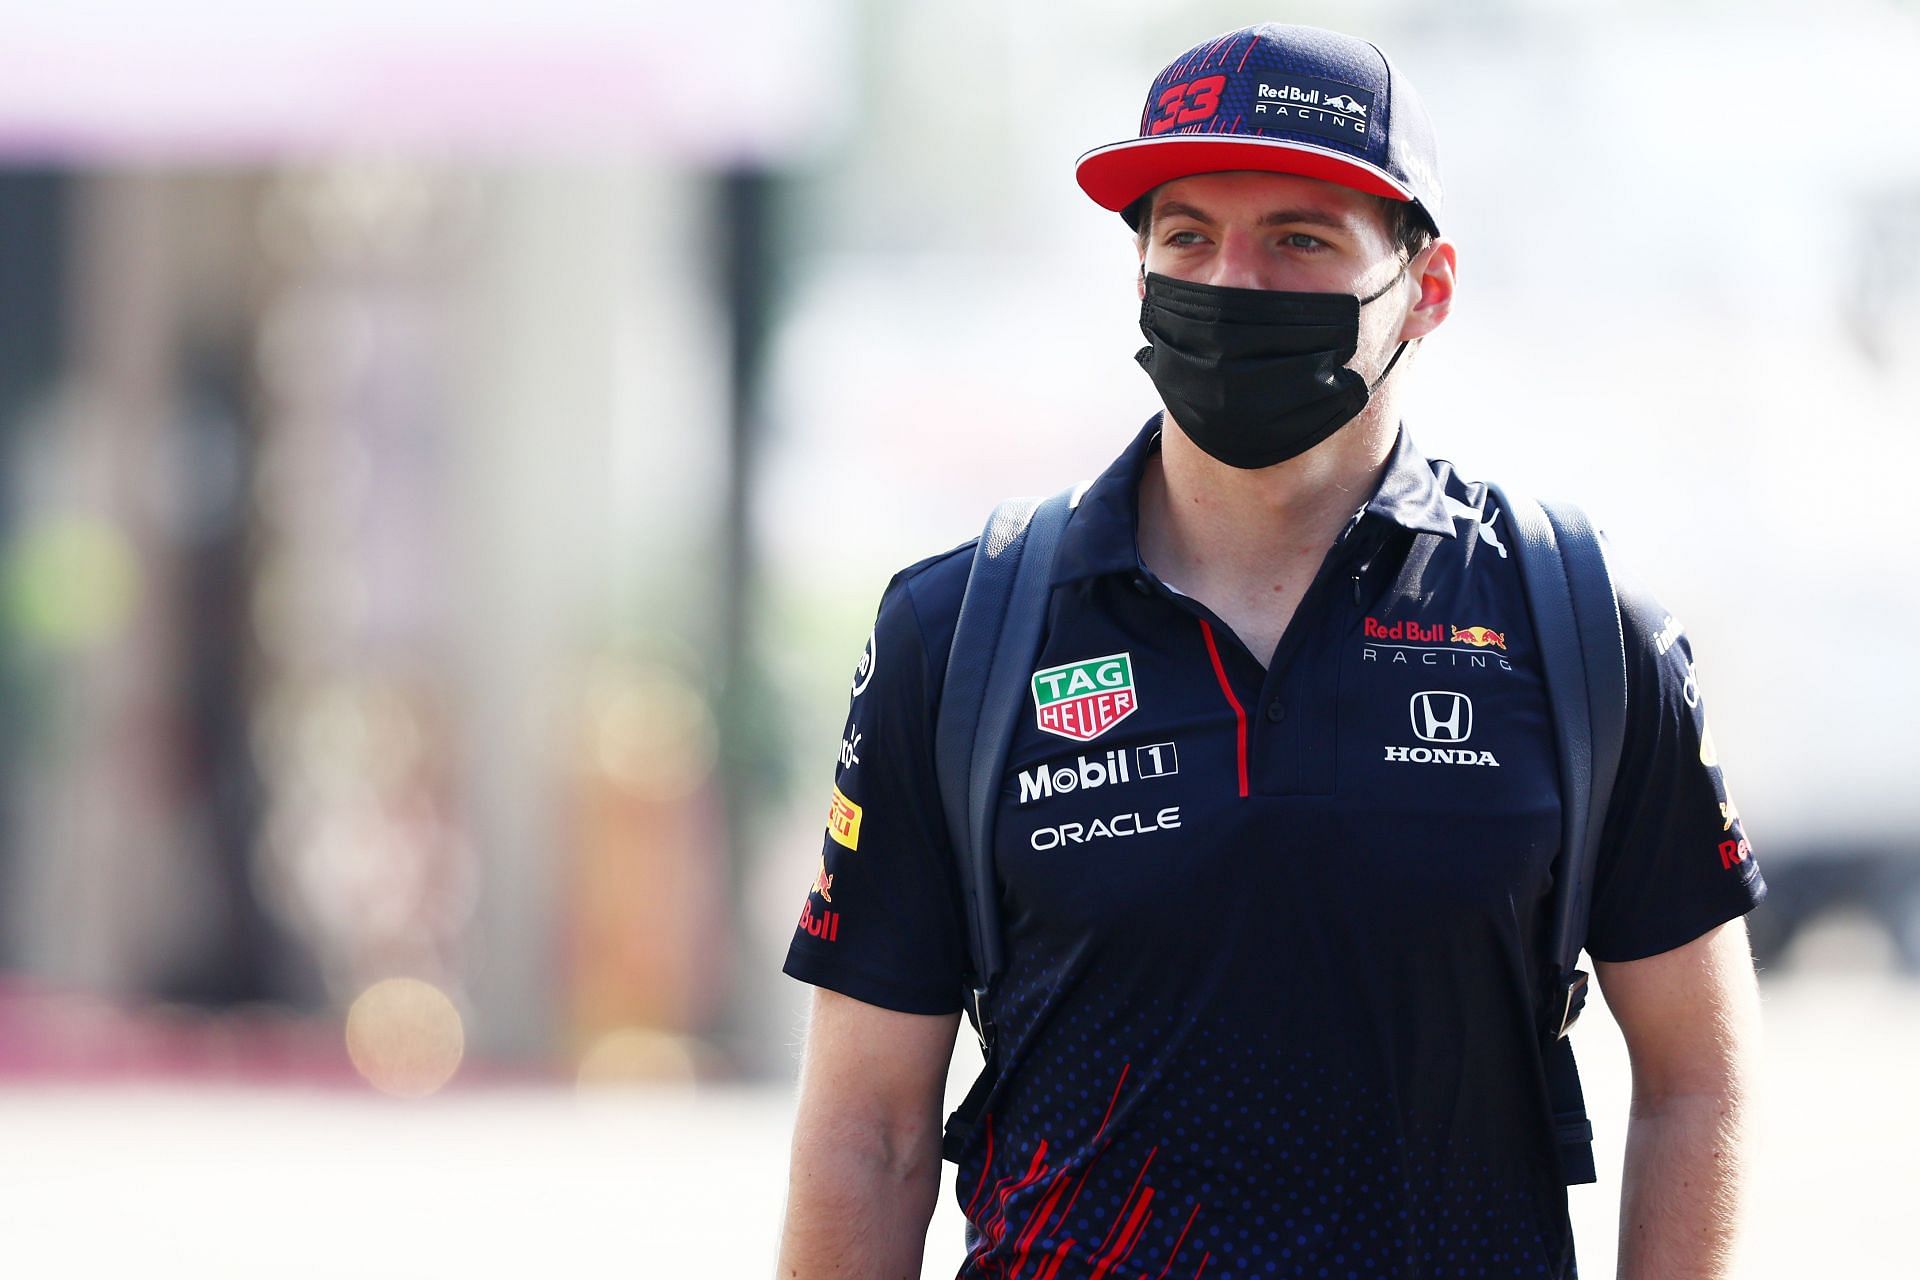 F1 Grand Prix of Saudi Arabia - Max Verstappen arrives at the track despite traffic.